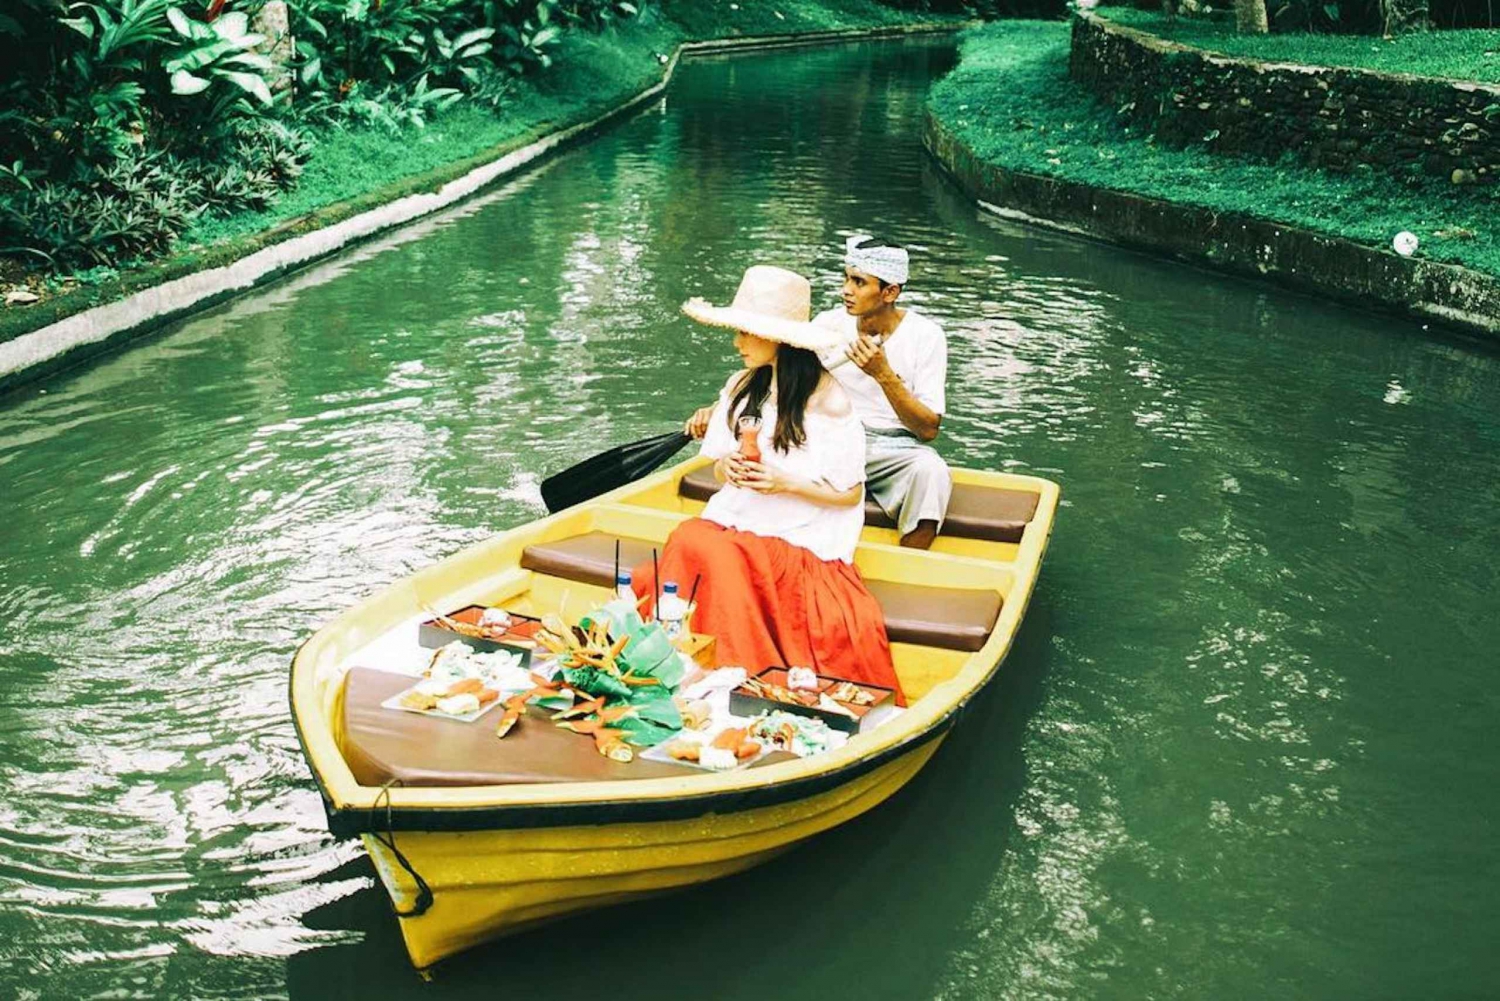 Ubud: Romantic Picnic Lunch on a Boat